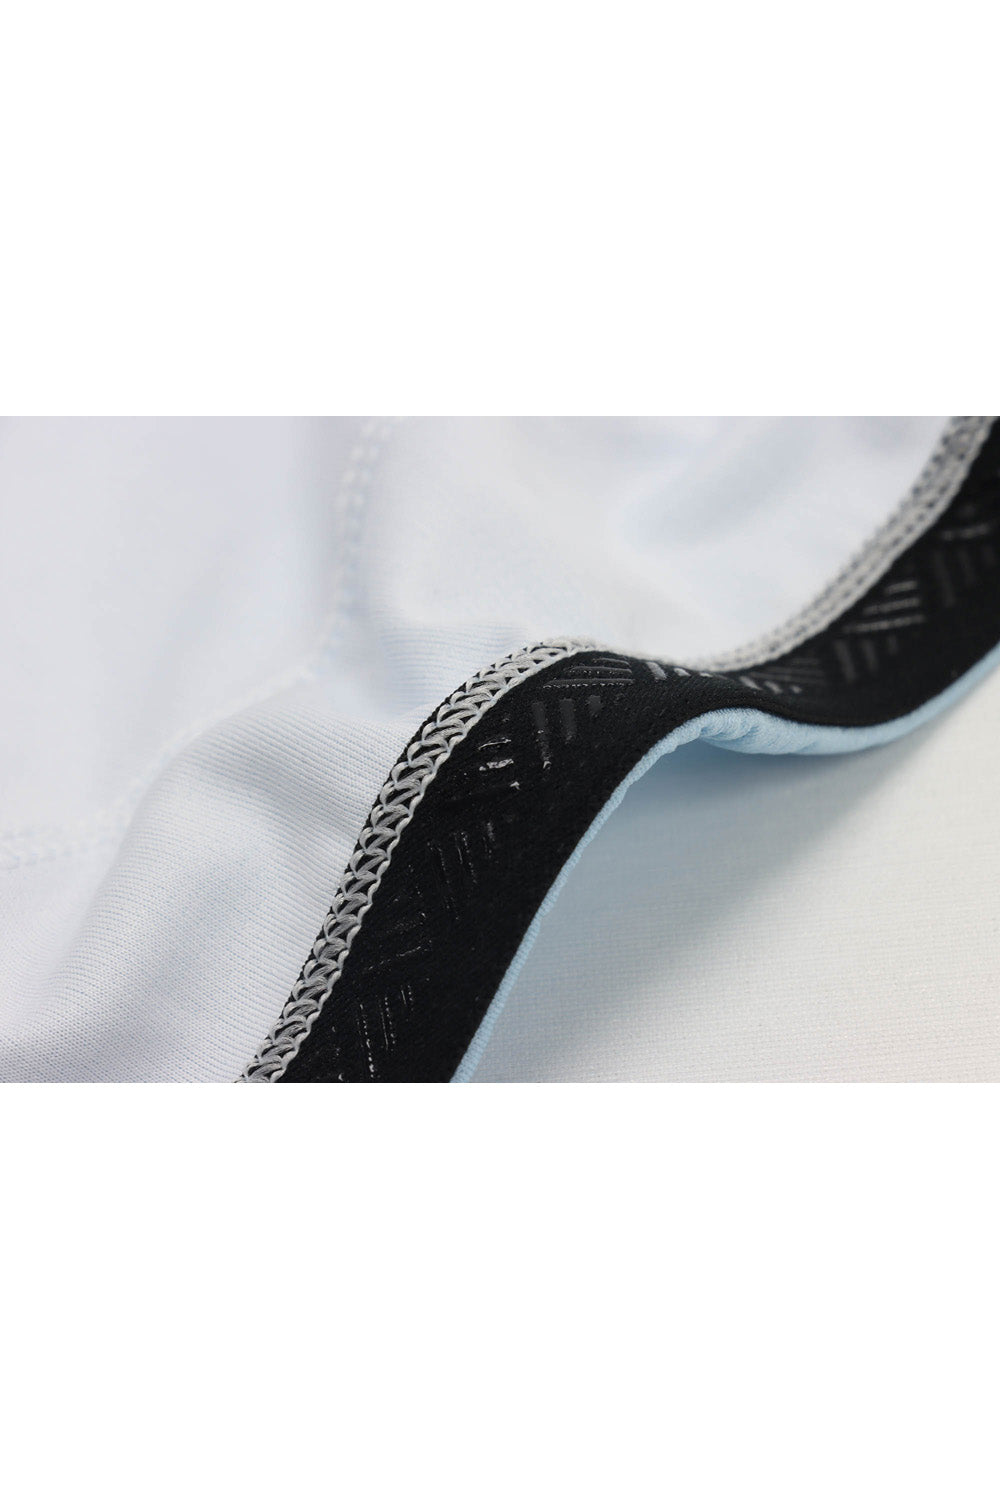 Sundried Ice Stripe Men's Long Sleeve Cycle Jersey Long Sleeve Jersey Activewear